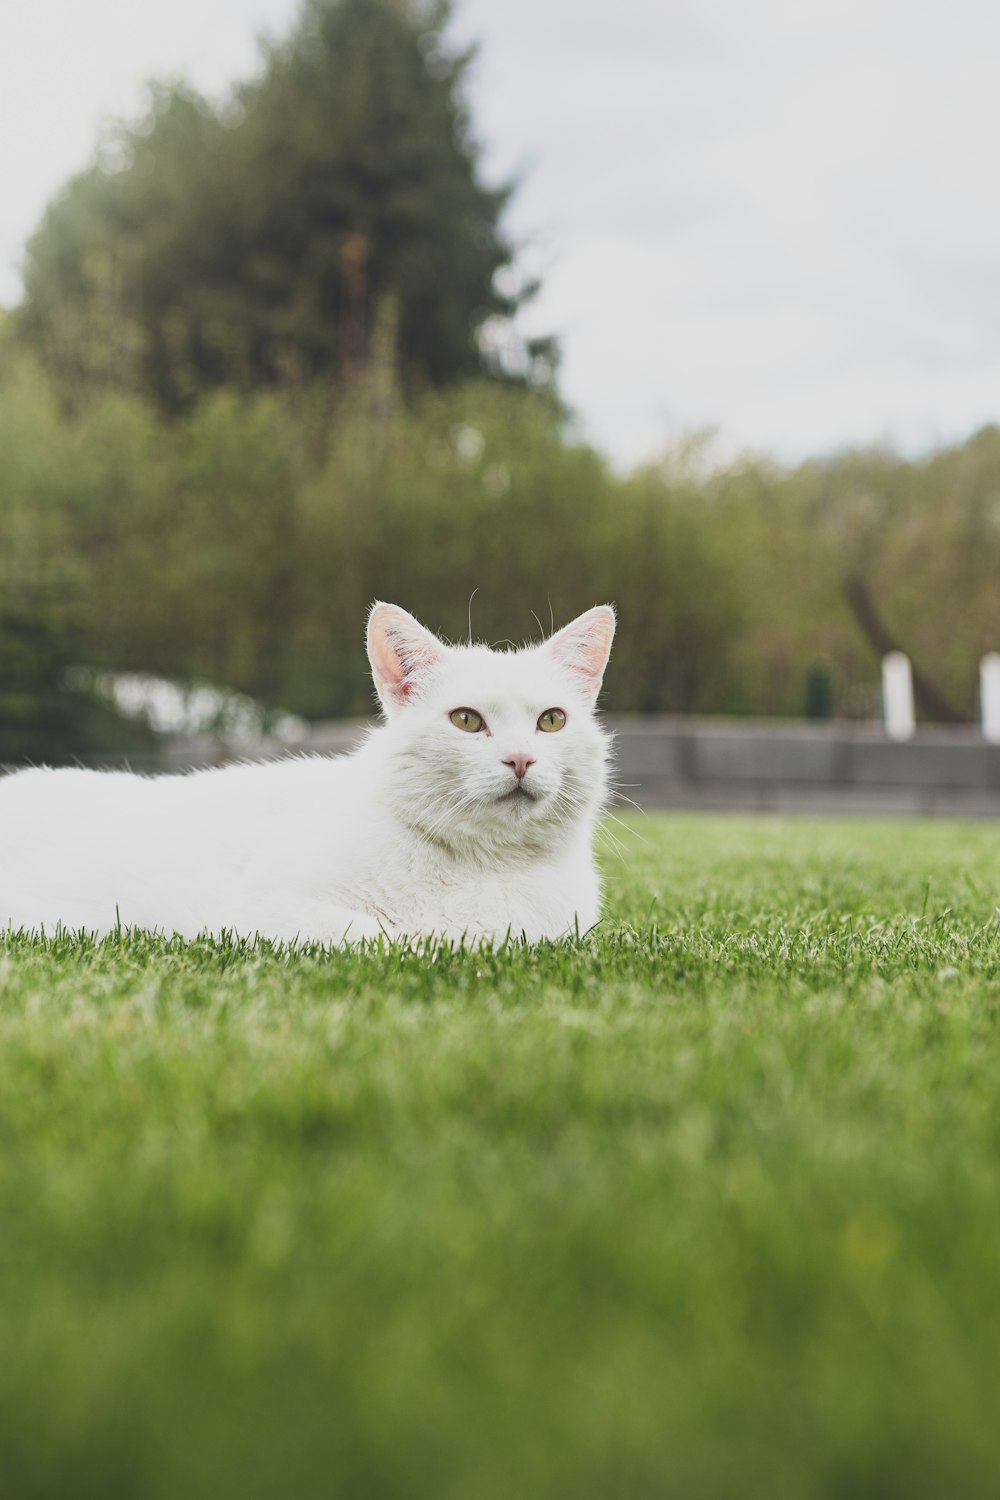 a white cat sitting in a grassy area